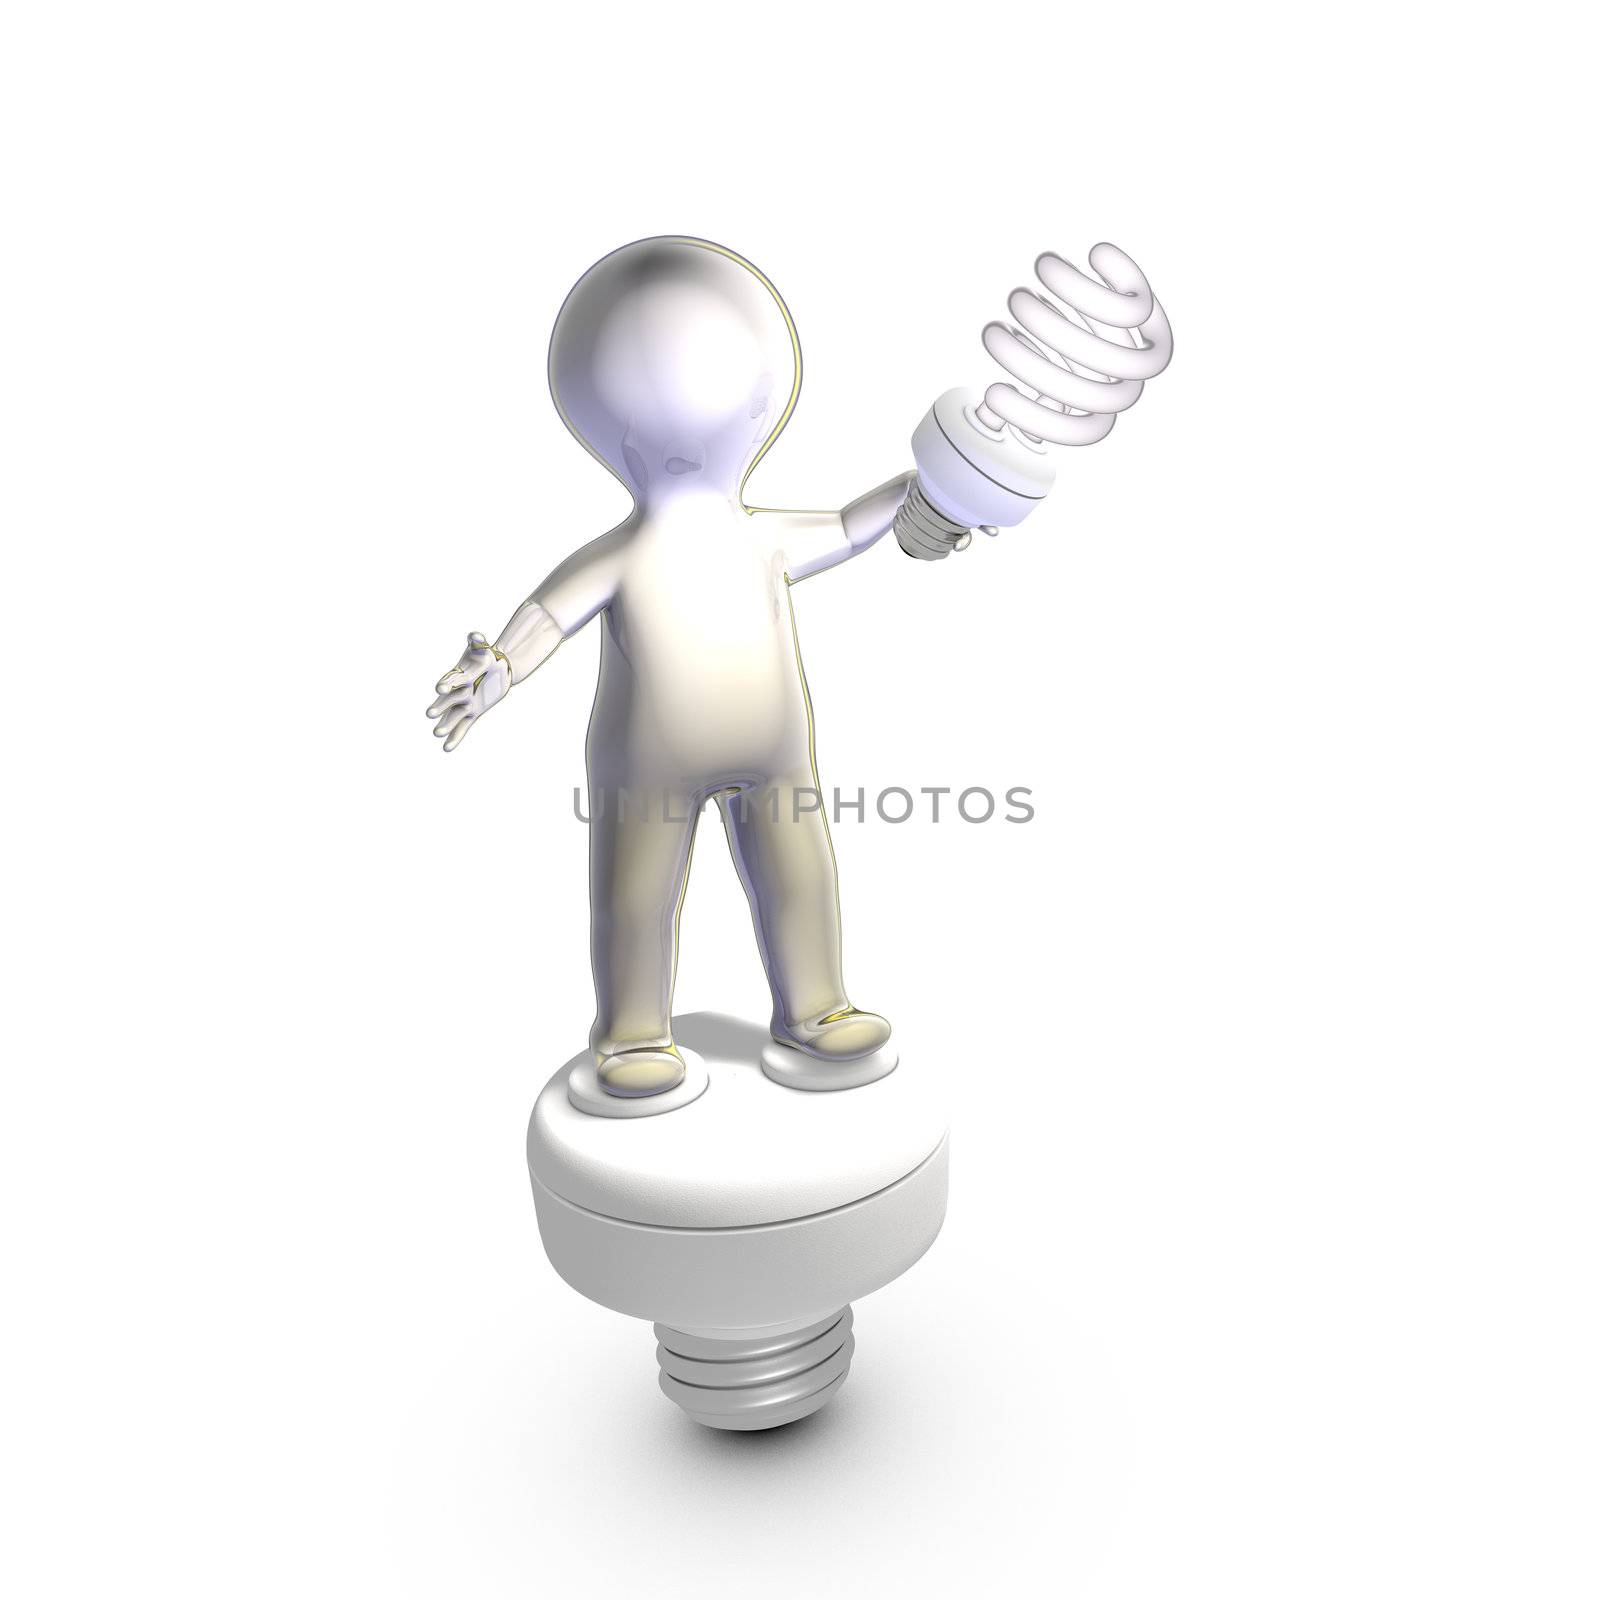 A character showing an electroluminescent light bulb